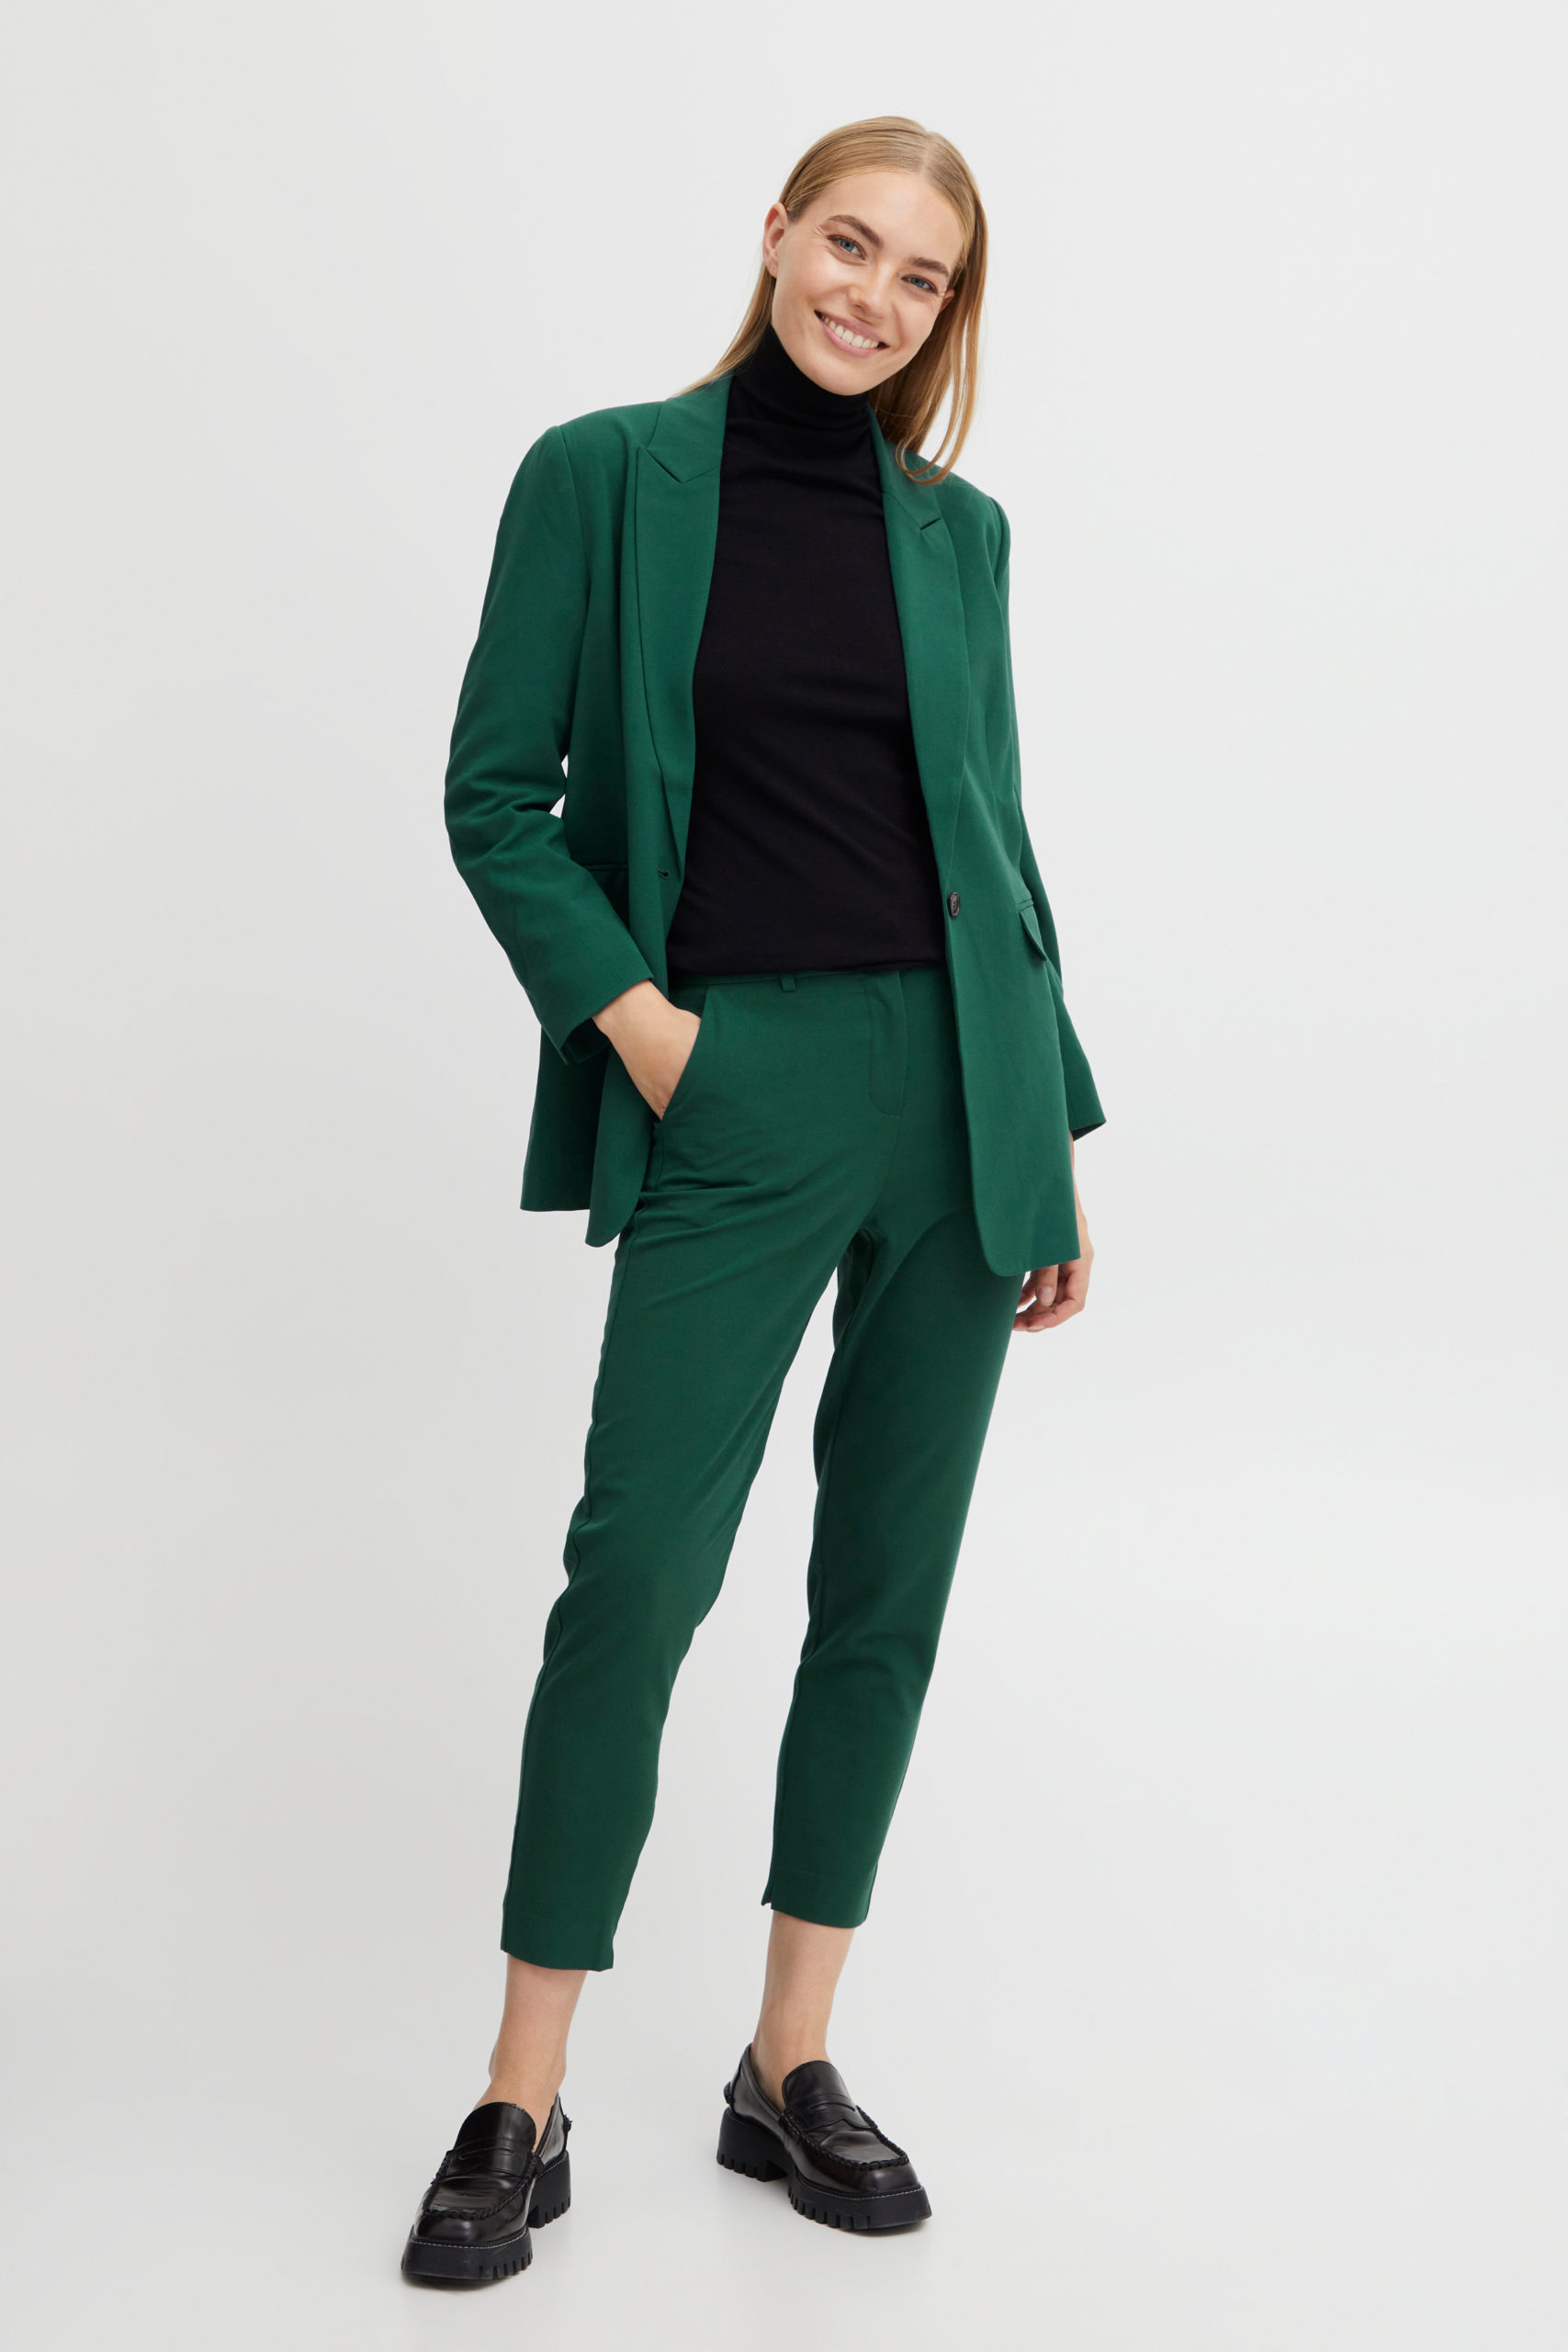 ByDanta Green Crop Pant suit